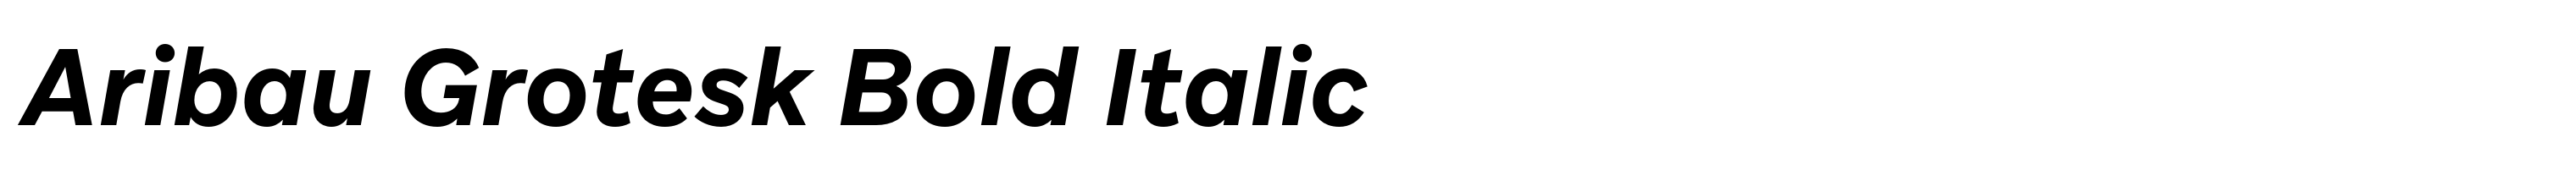 Aribau Grotesk Bold Italic